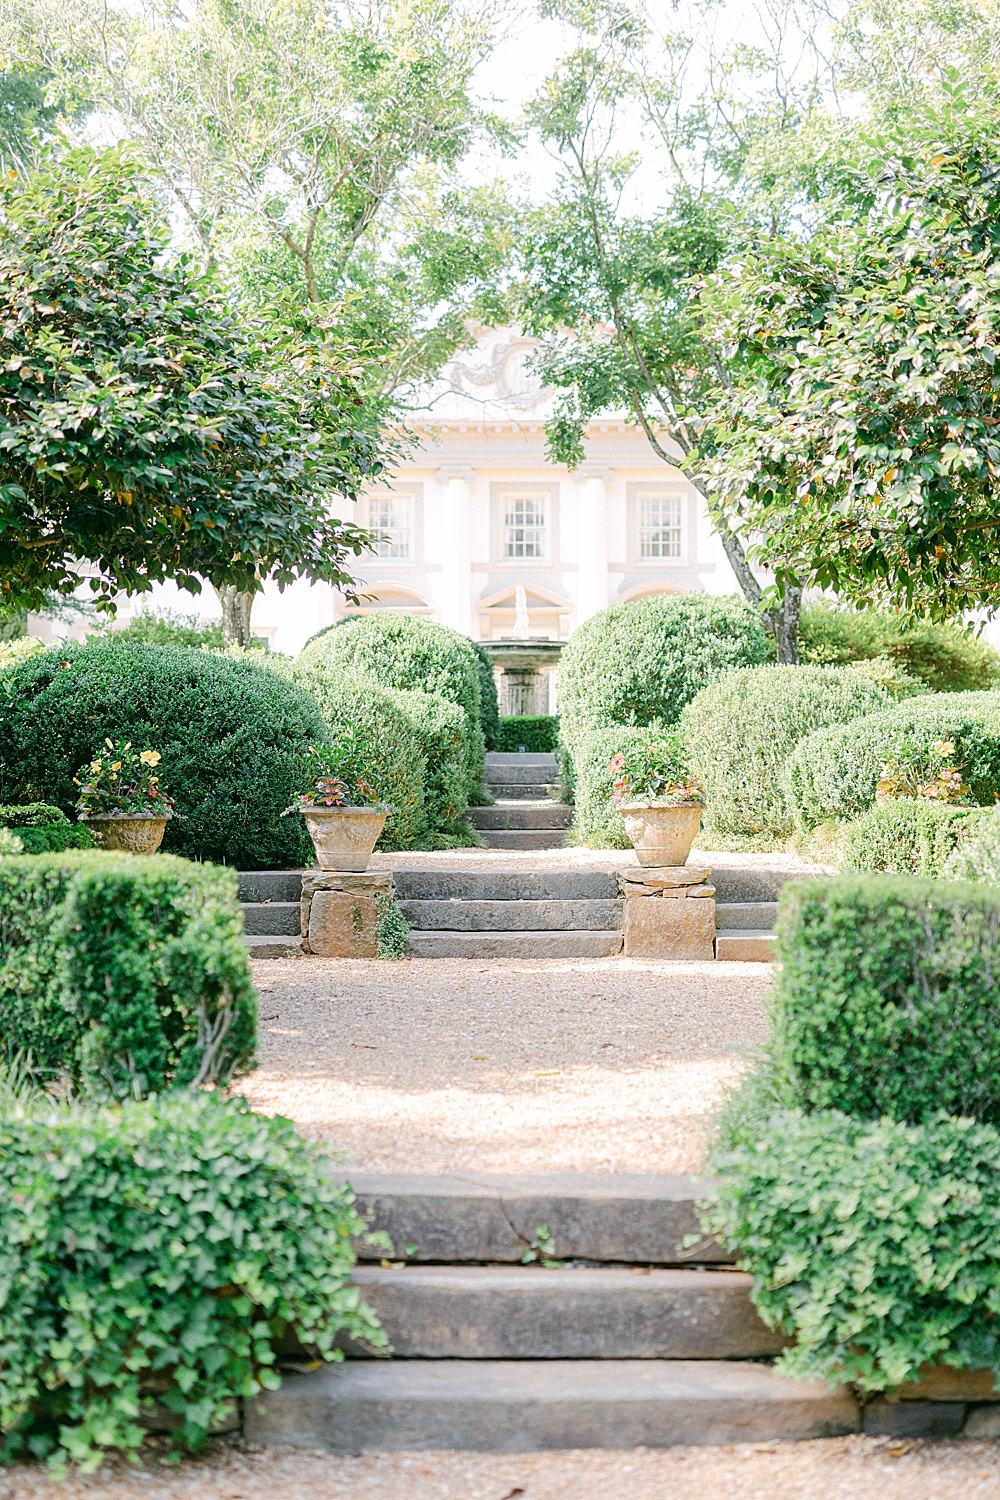 The gardens at Hills & Dales Estate in Lagrange, Georgia